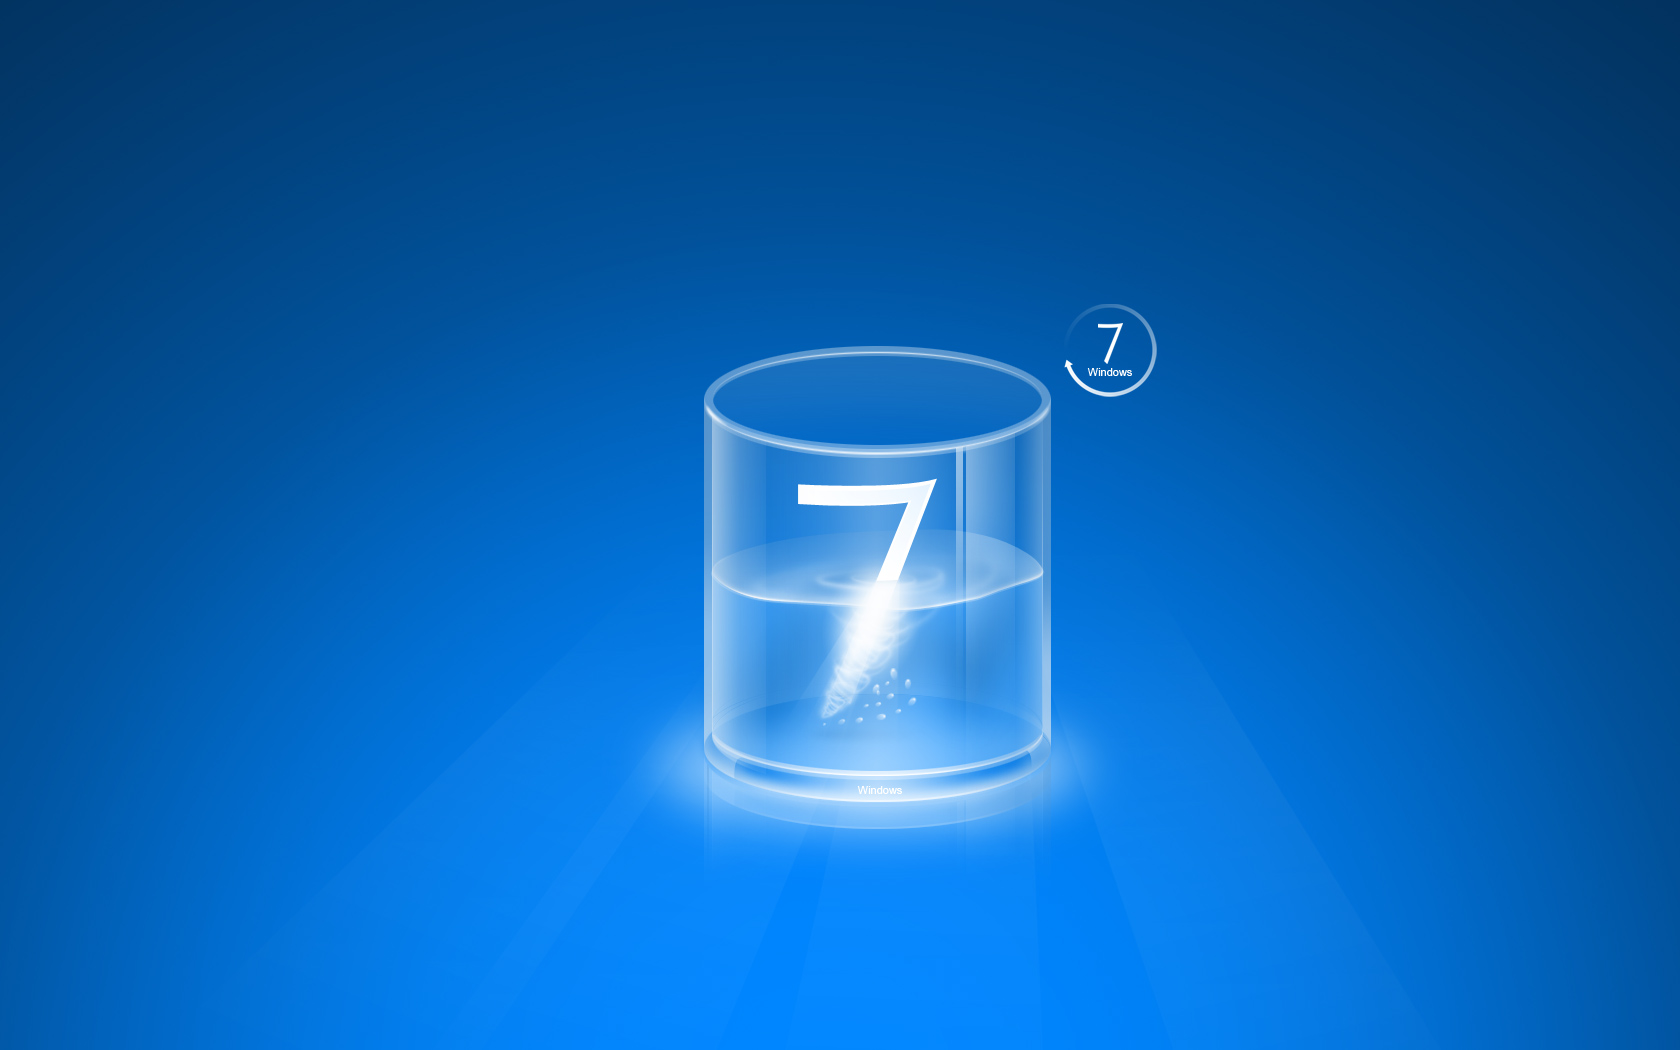 Blue Windows Seven Number Wallpaper Desktop With